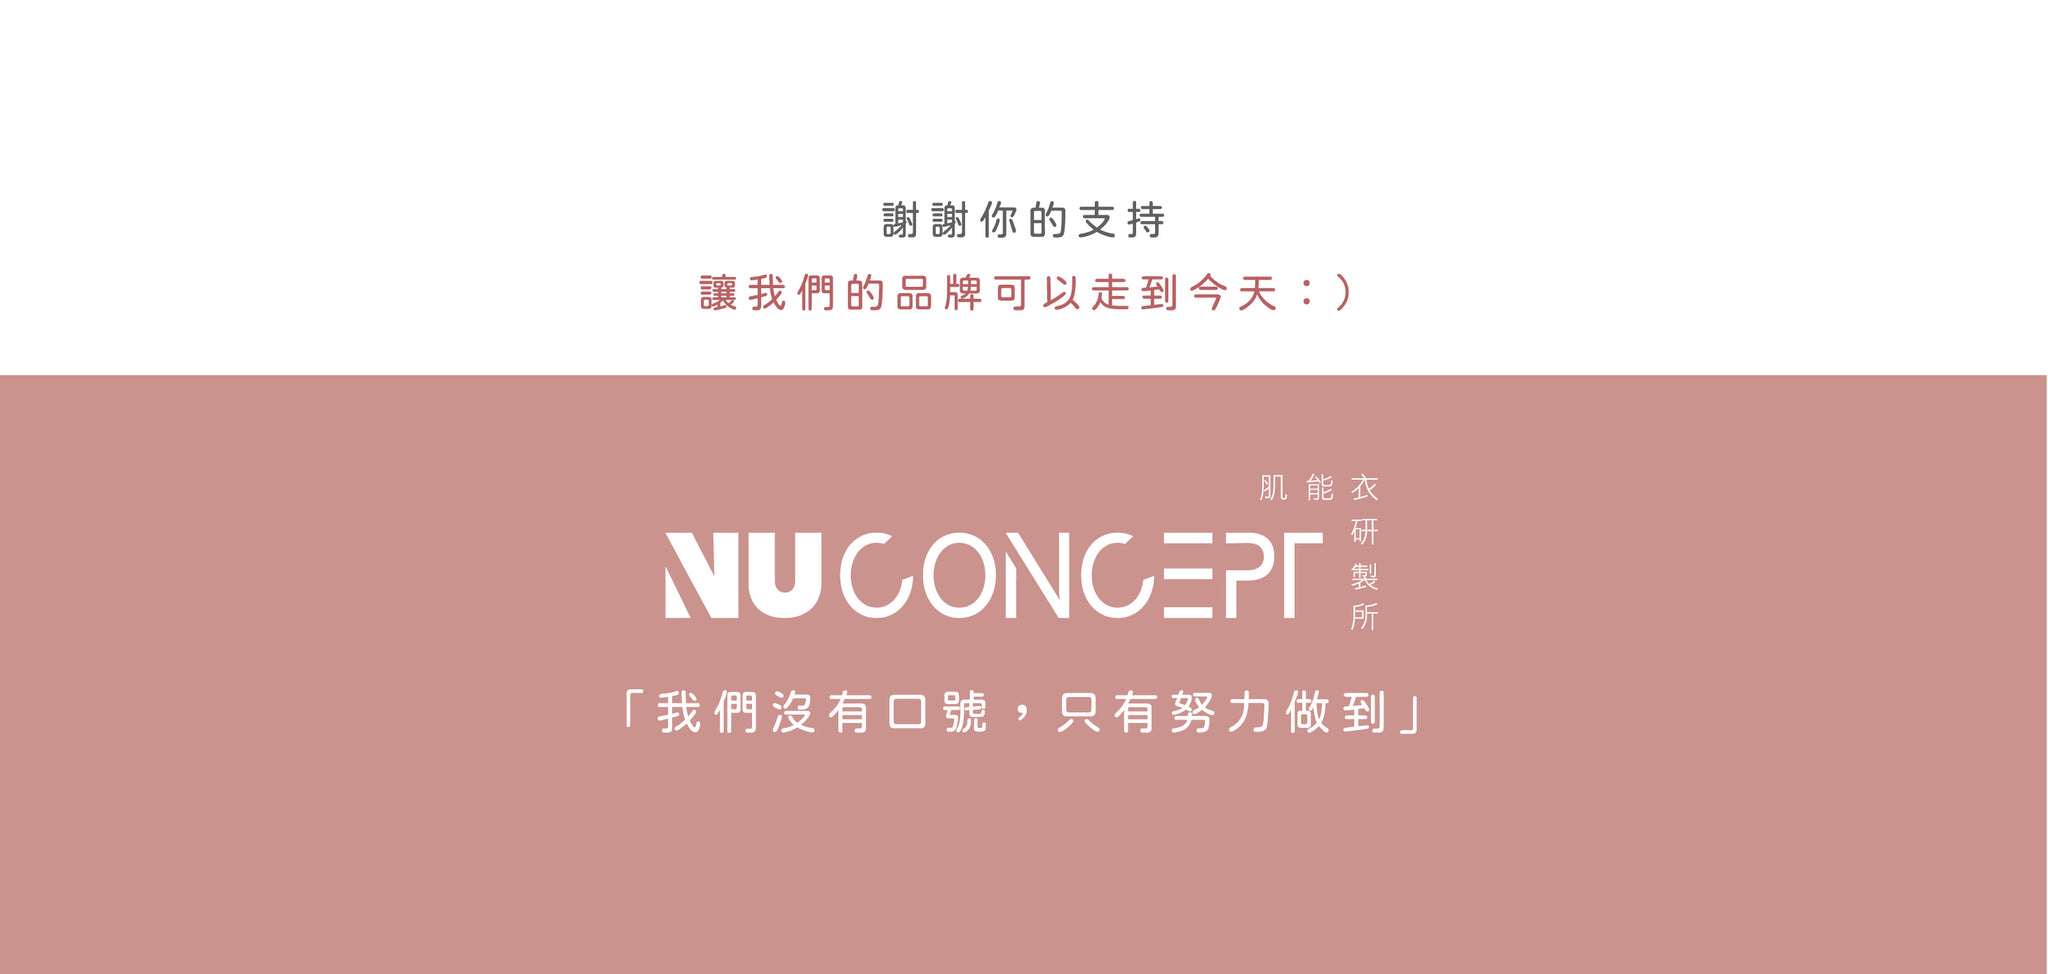 NU Concept 肌能衣研製所堅持最好的品質，持續創新，只將最好的呈現！